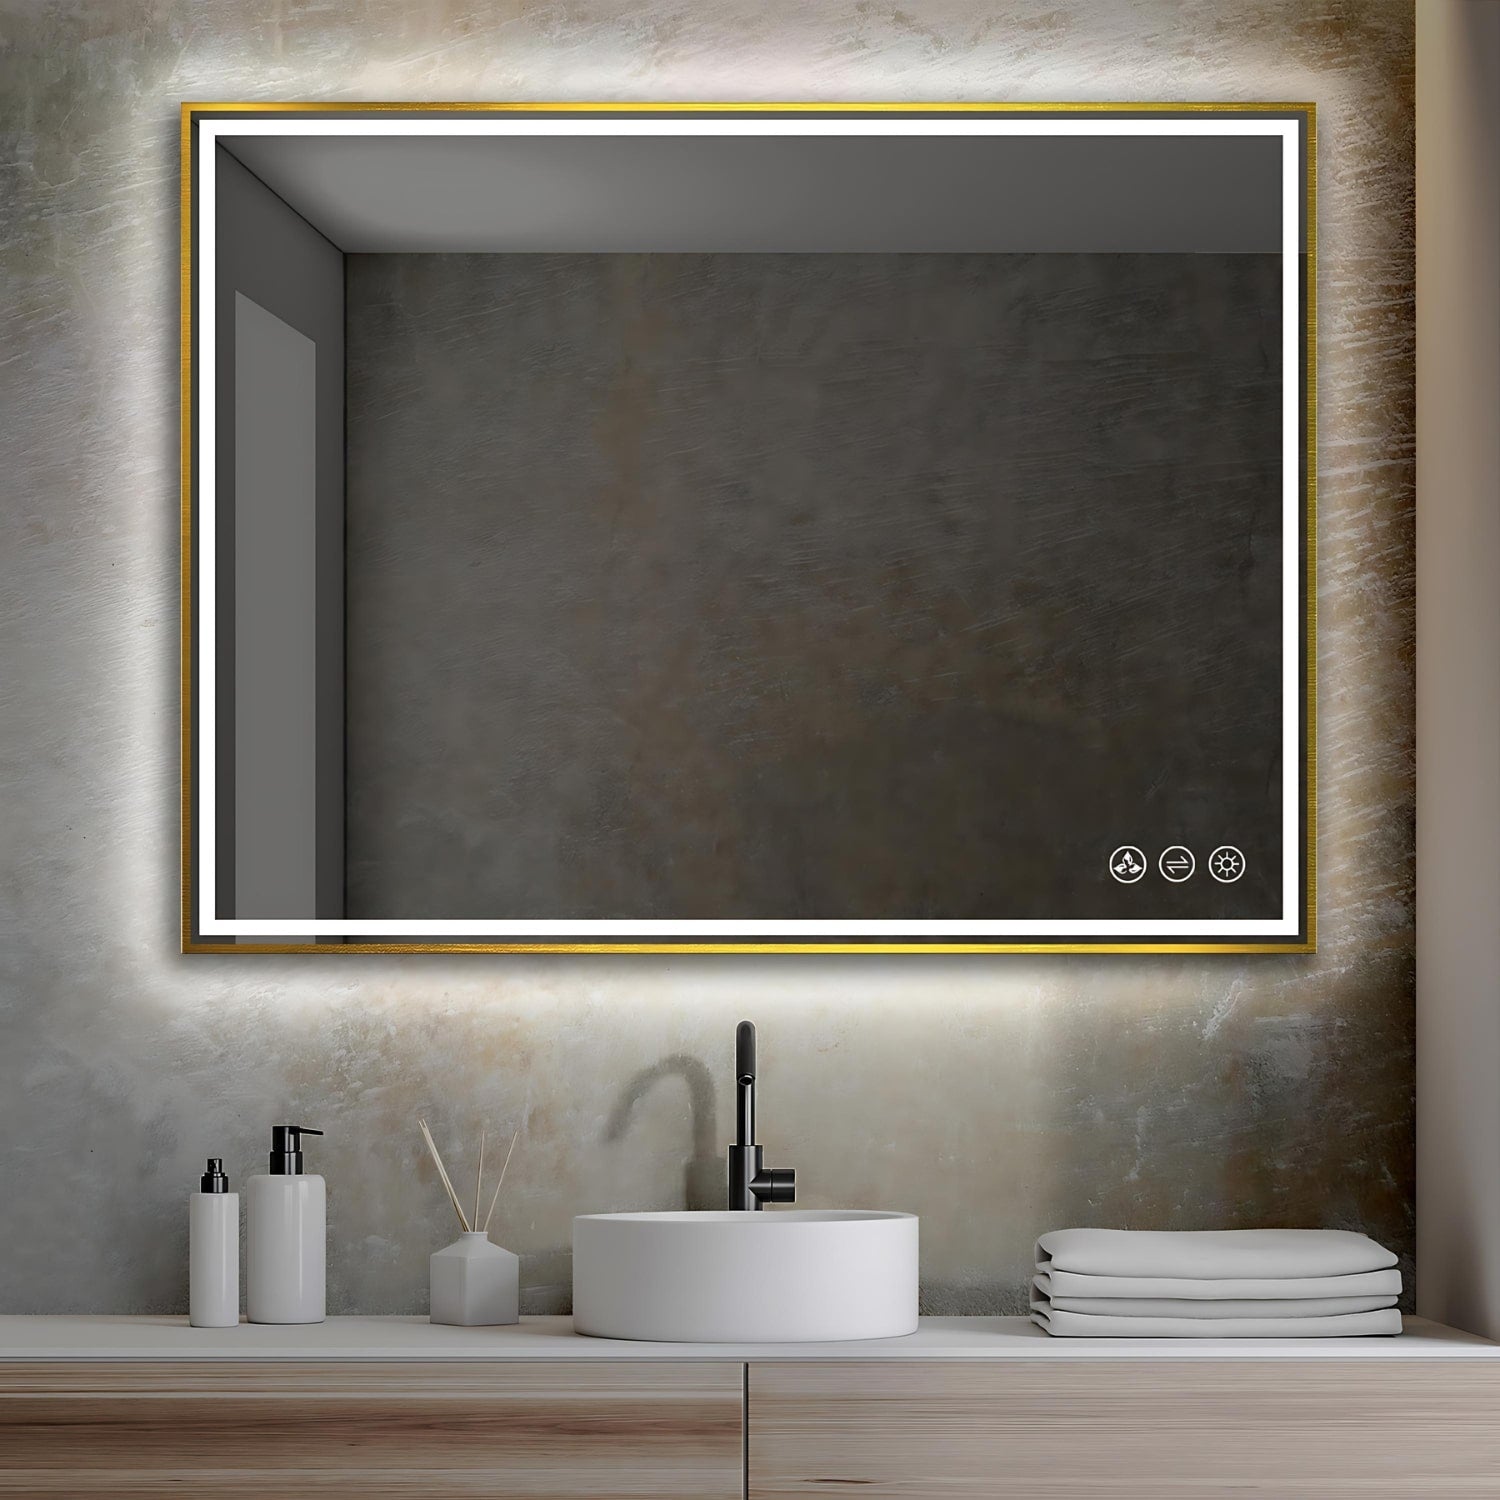 The Stellar bathroom LED Mirror you've always wanted